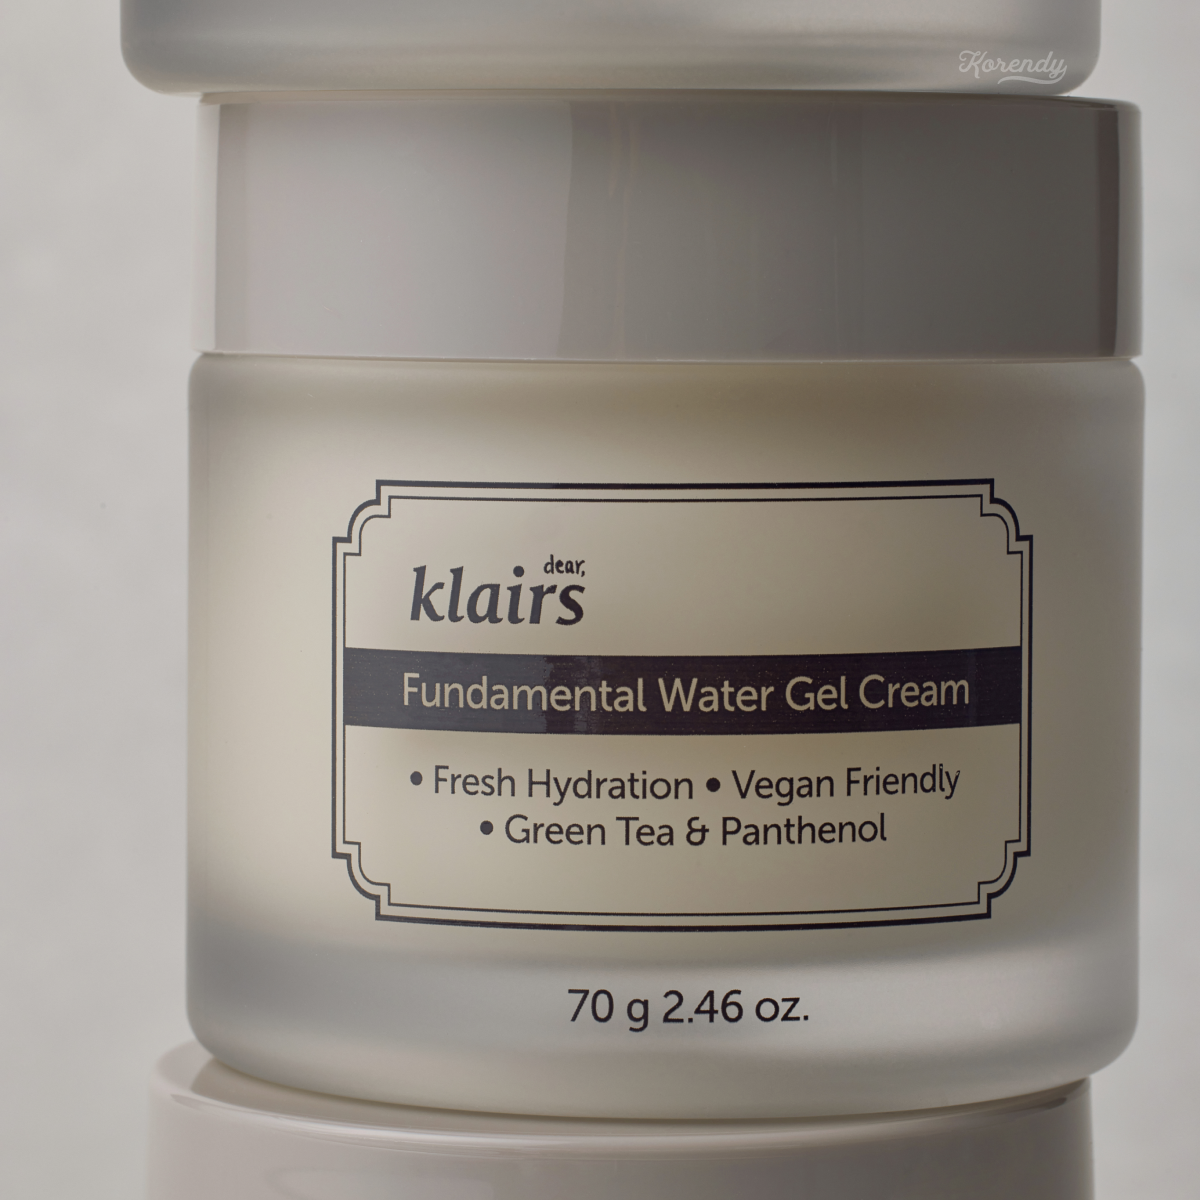 Klairs - Fundamental Water Gel Cream